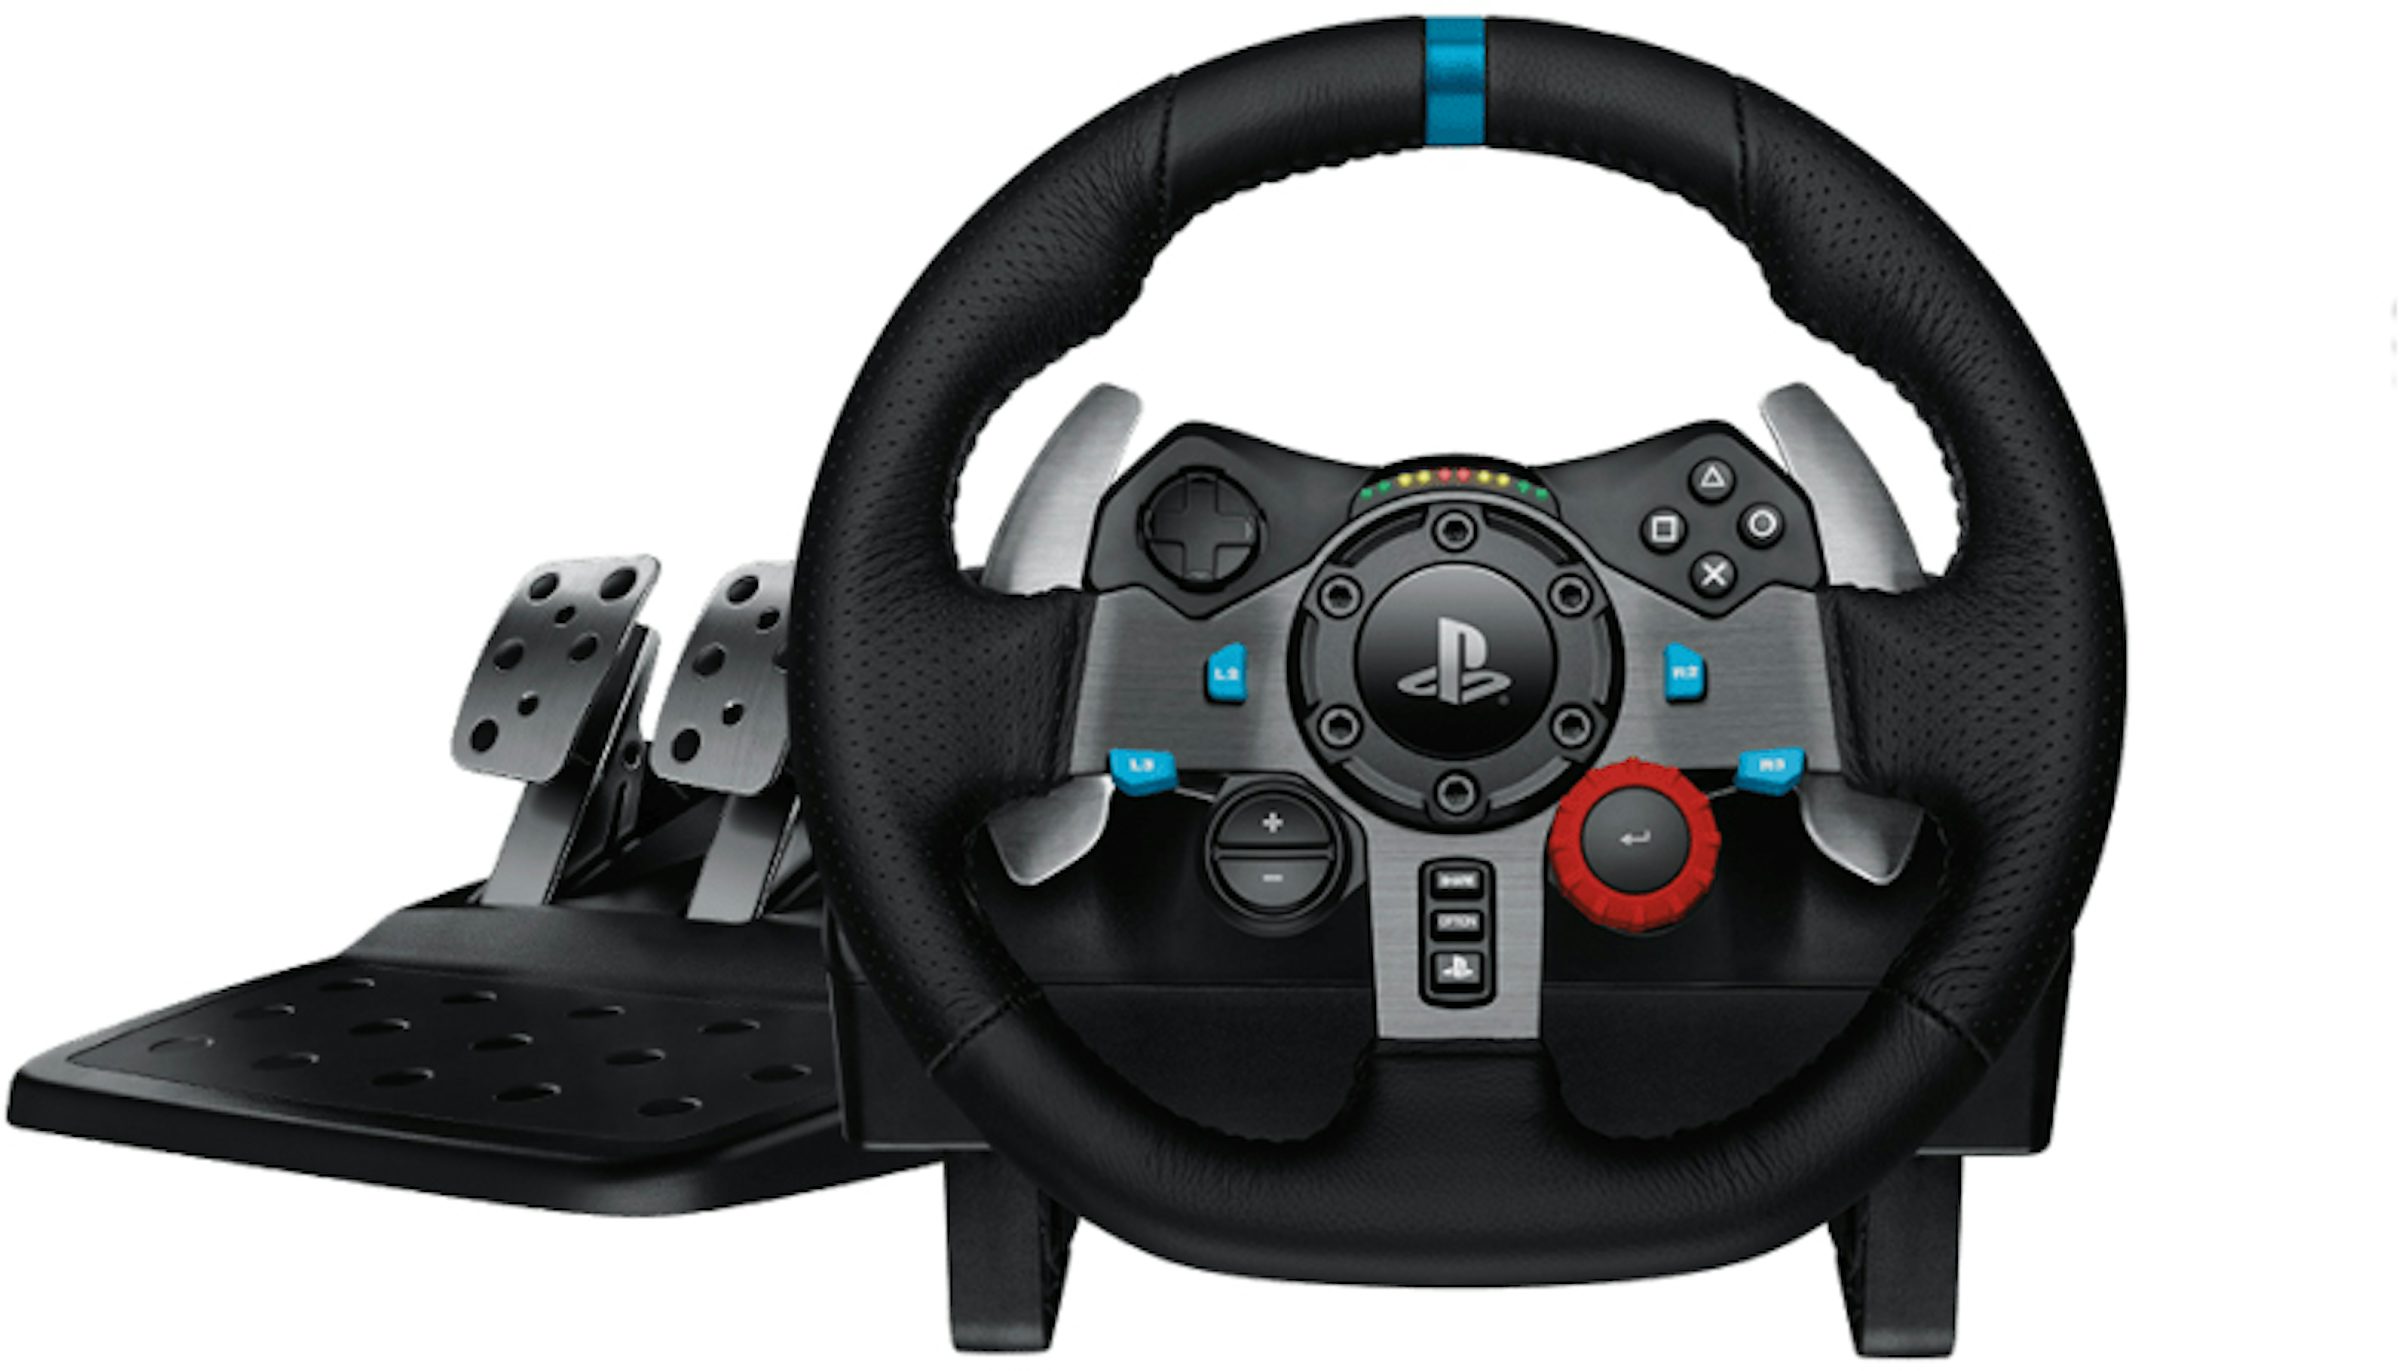 Gaming Racing Steering Wheel for Sony Playstation 4 PS4 Gamepad